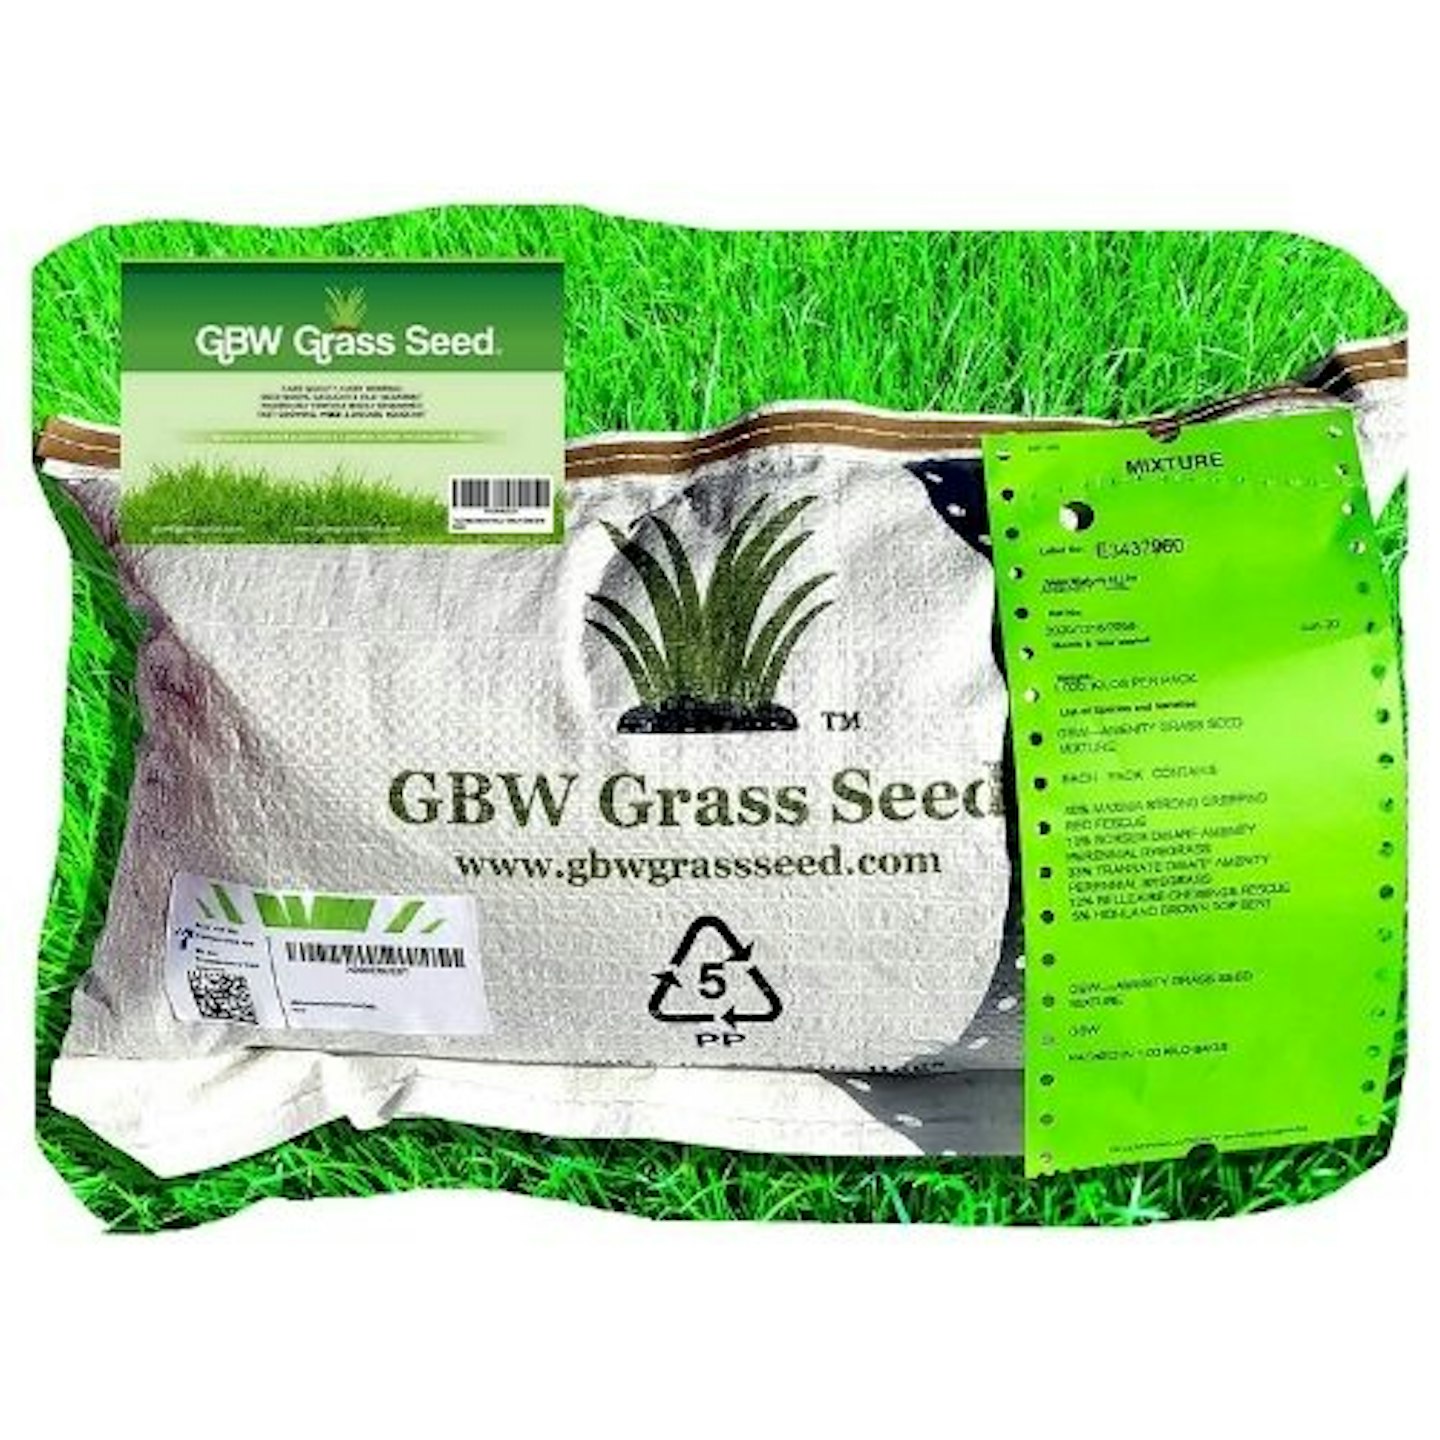 GBW Grass Seed